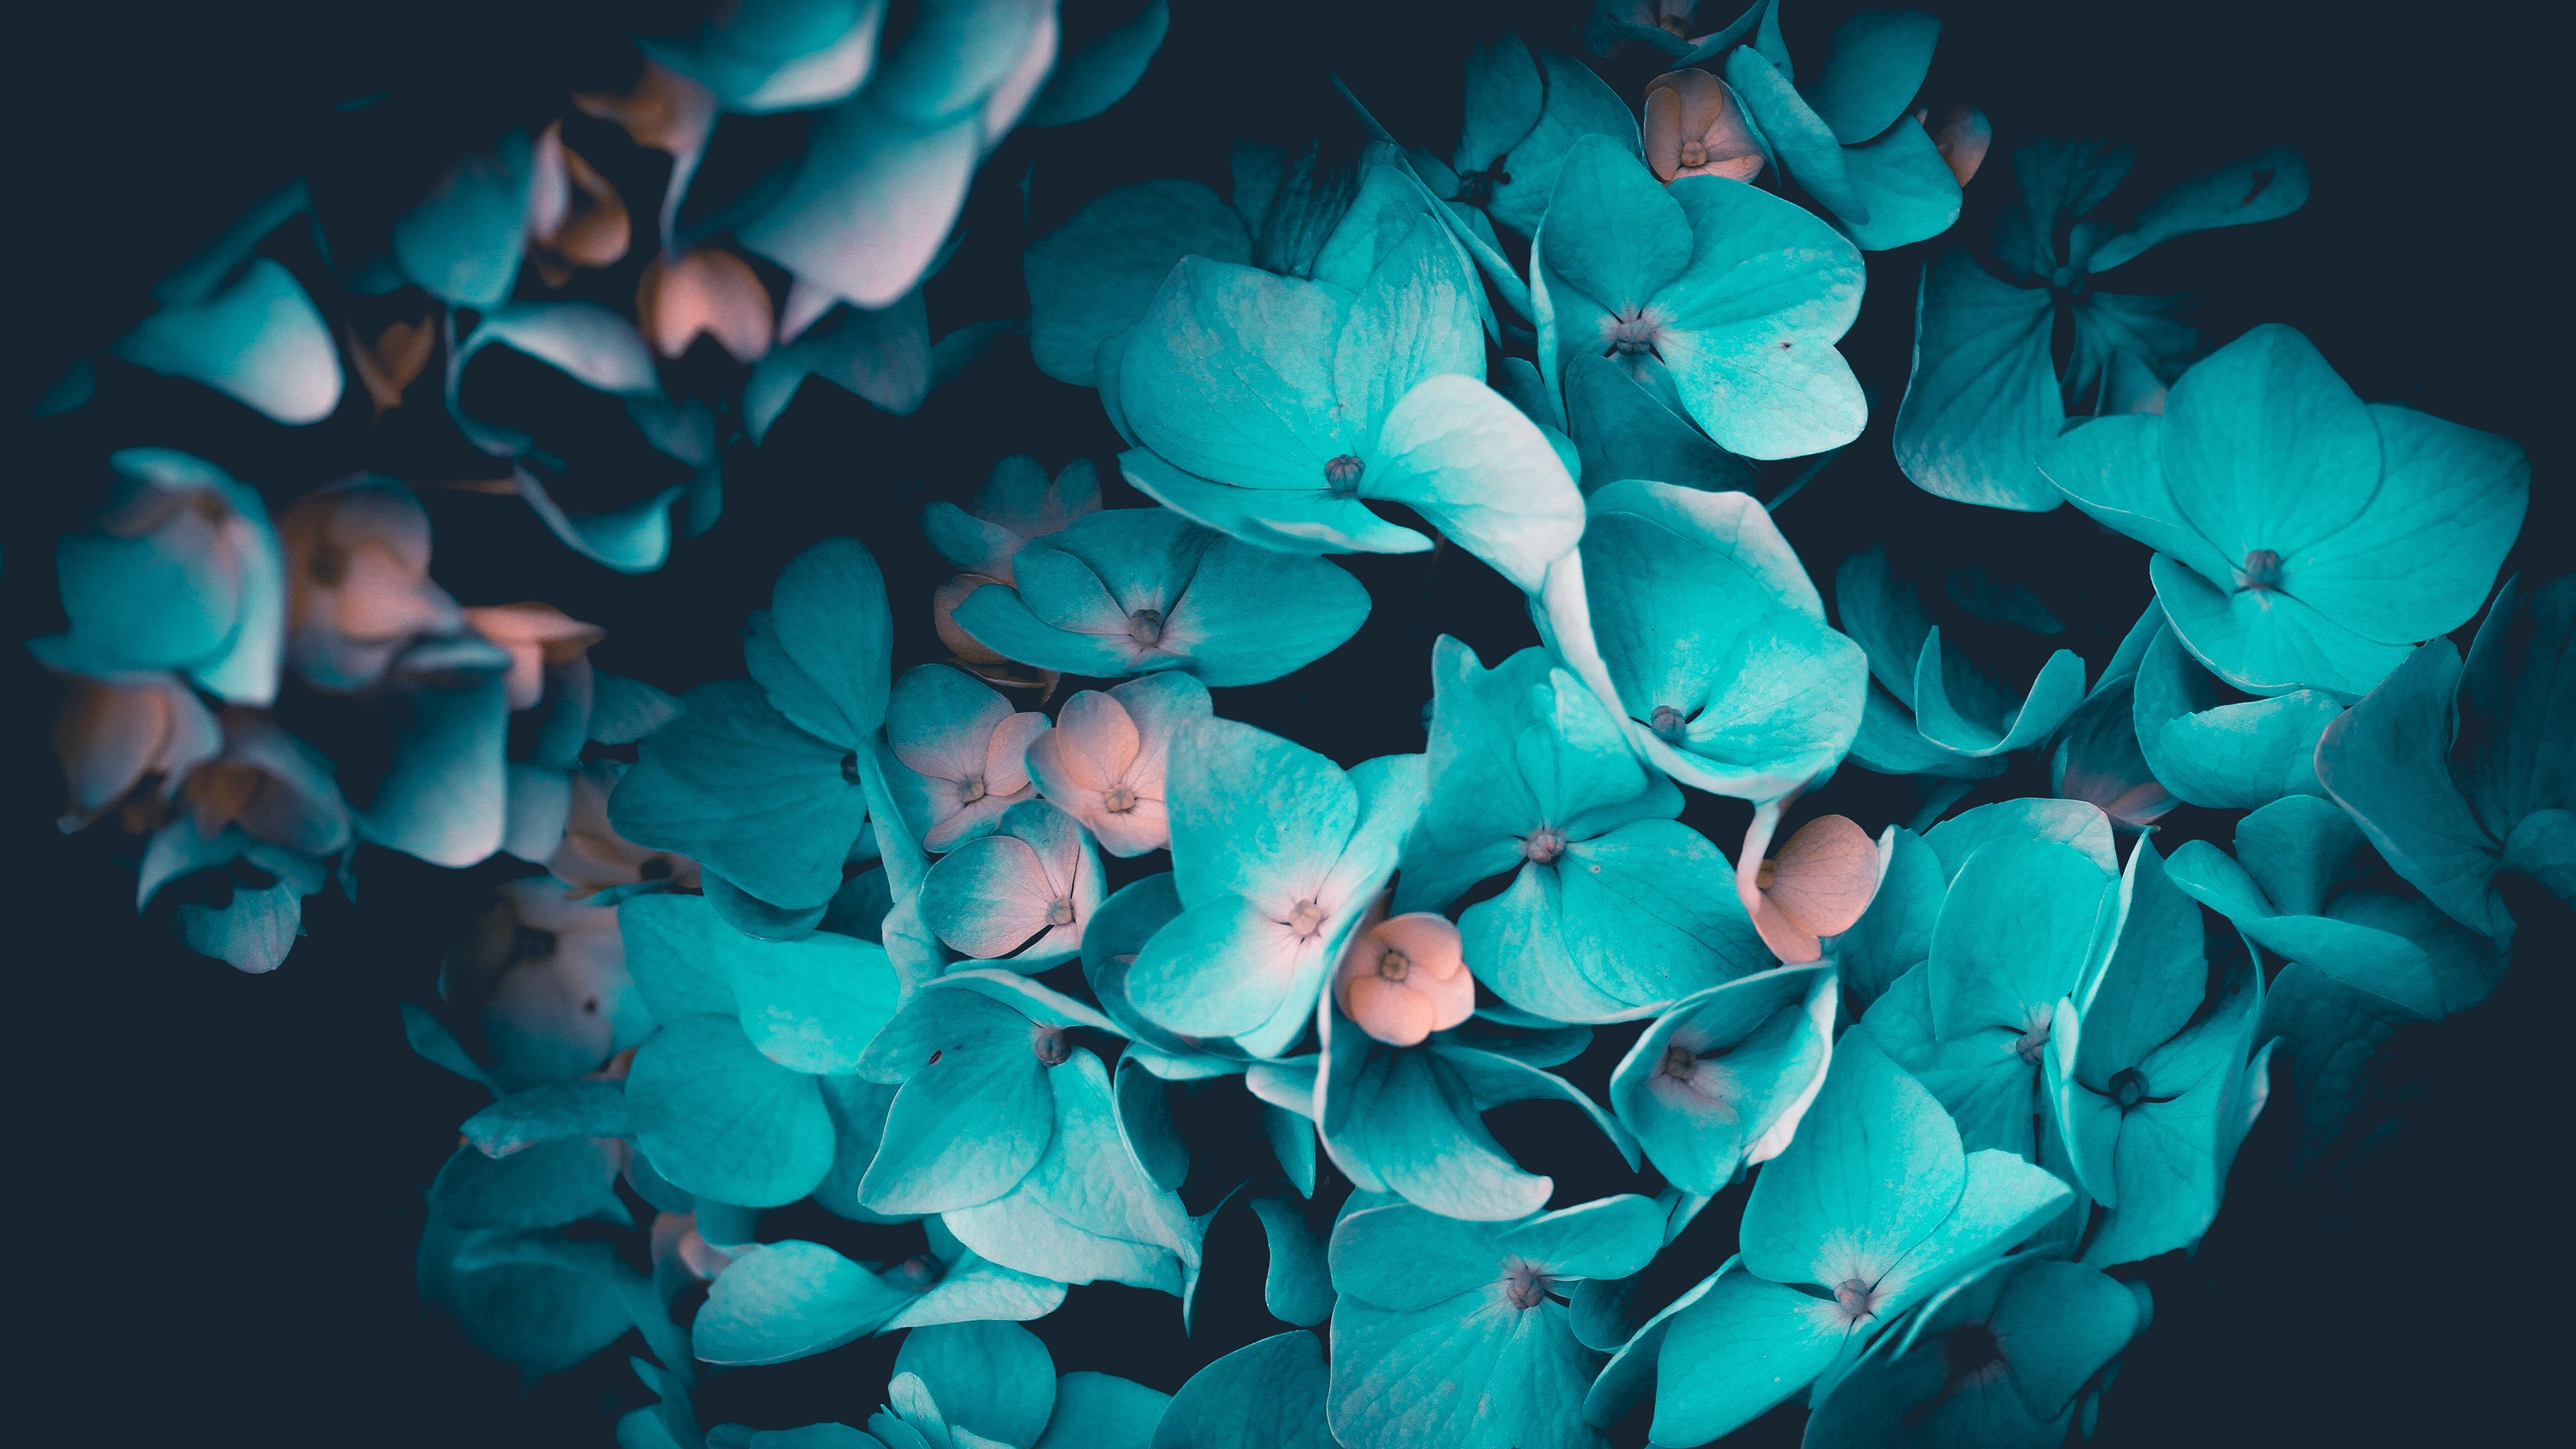 Blue flowers, Petals, Teal, Black background, 4k Free deskk wallpaper, Ultra HD